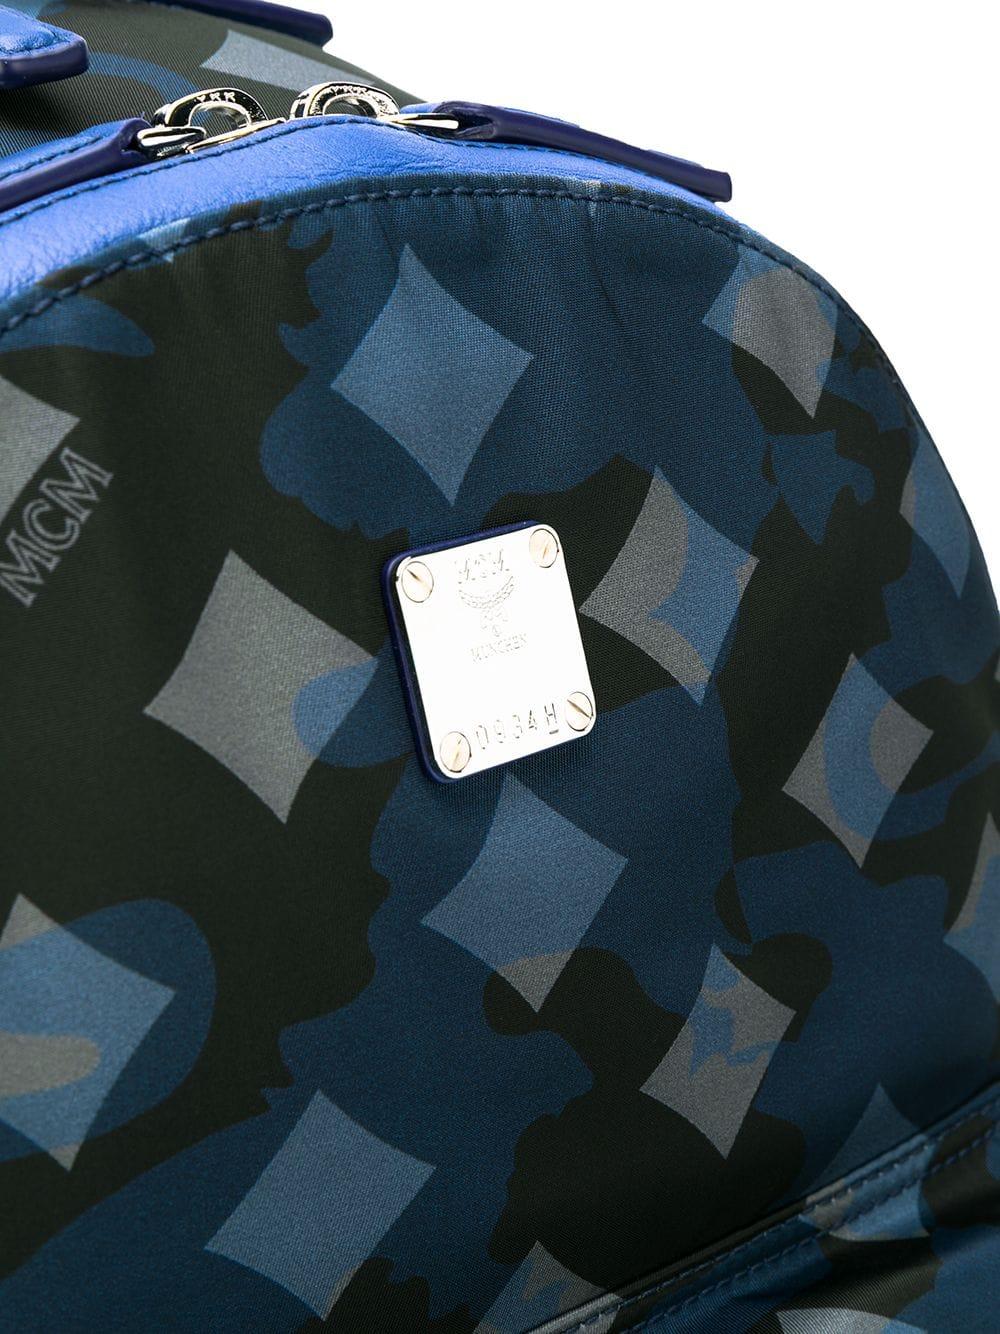 MCM Luft Nylon Backpack in Blue